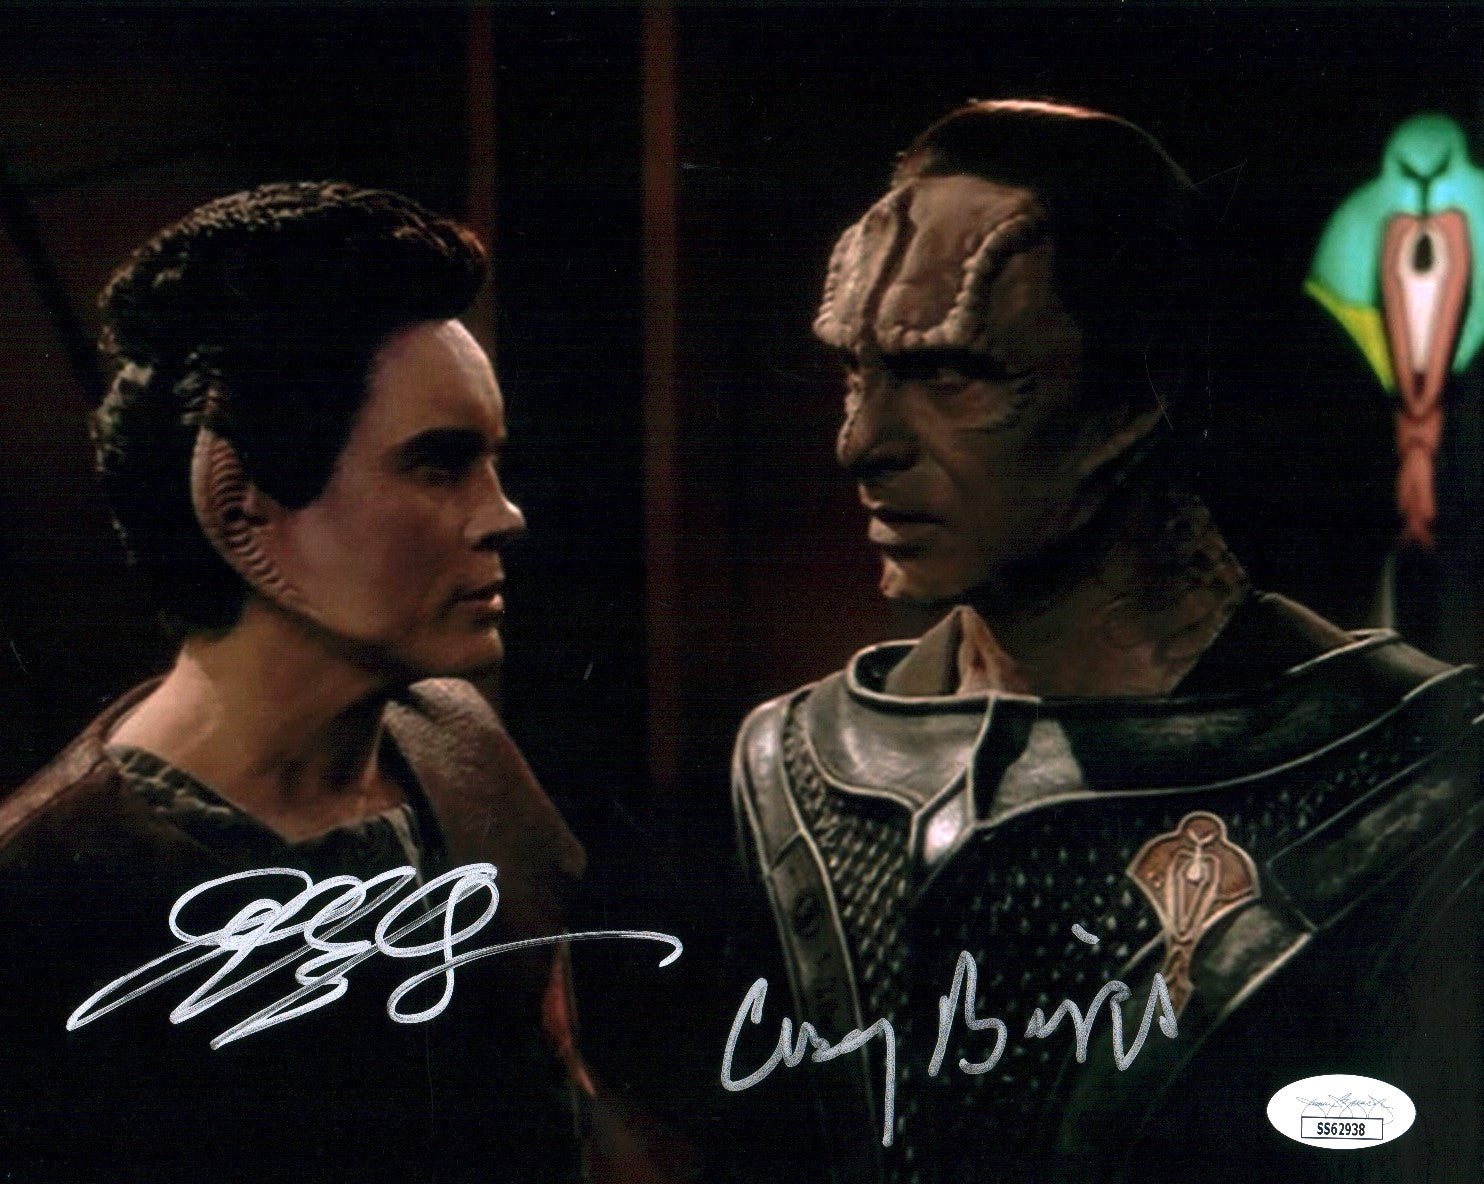 Star Trek: DS9 8x10 Photo Signed Biggs Combs Autograph JSA Certified COA